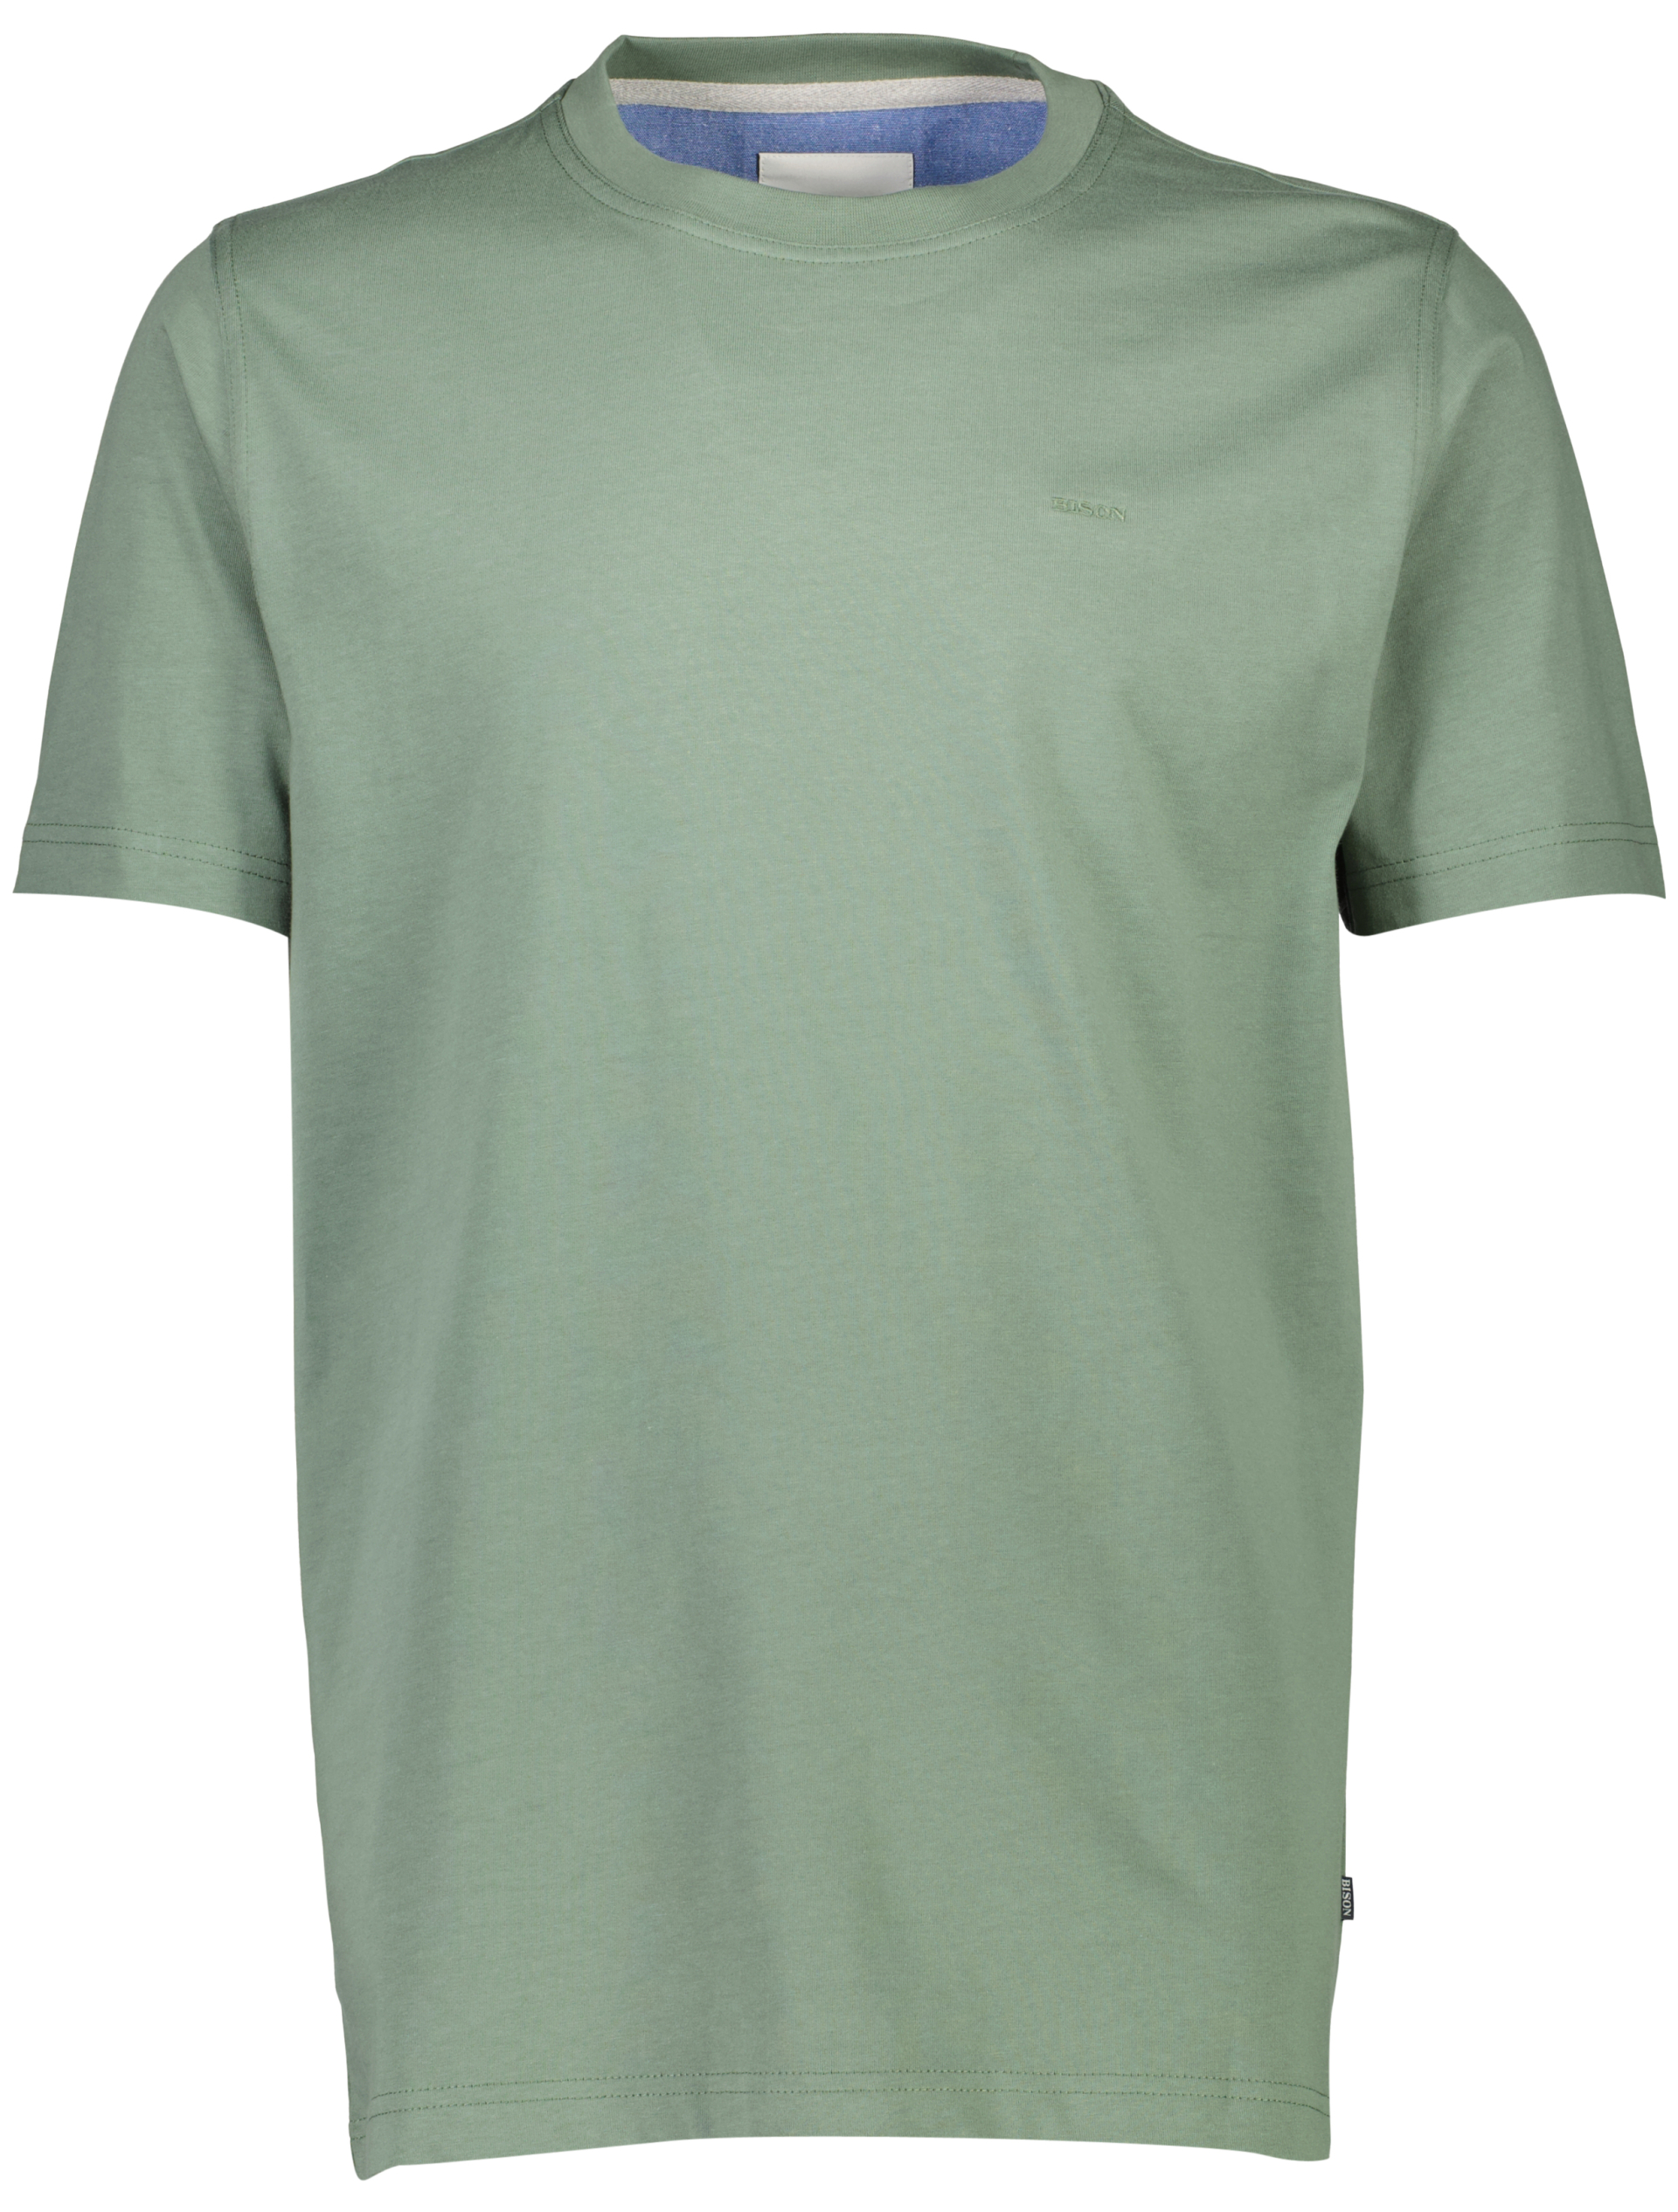 Bison T-shirt grøn / green 224